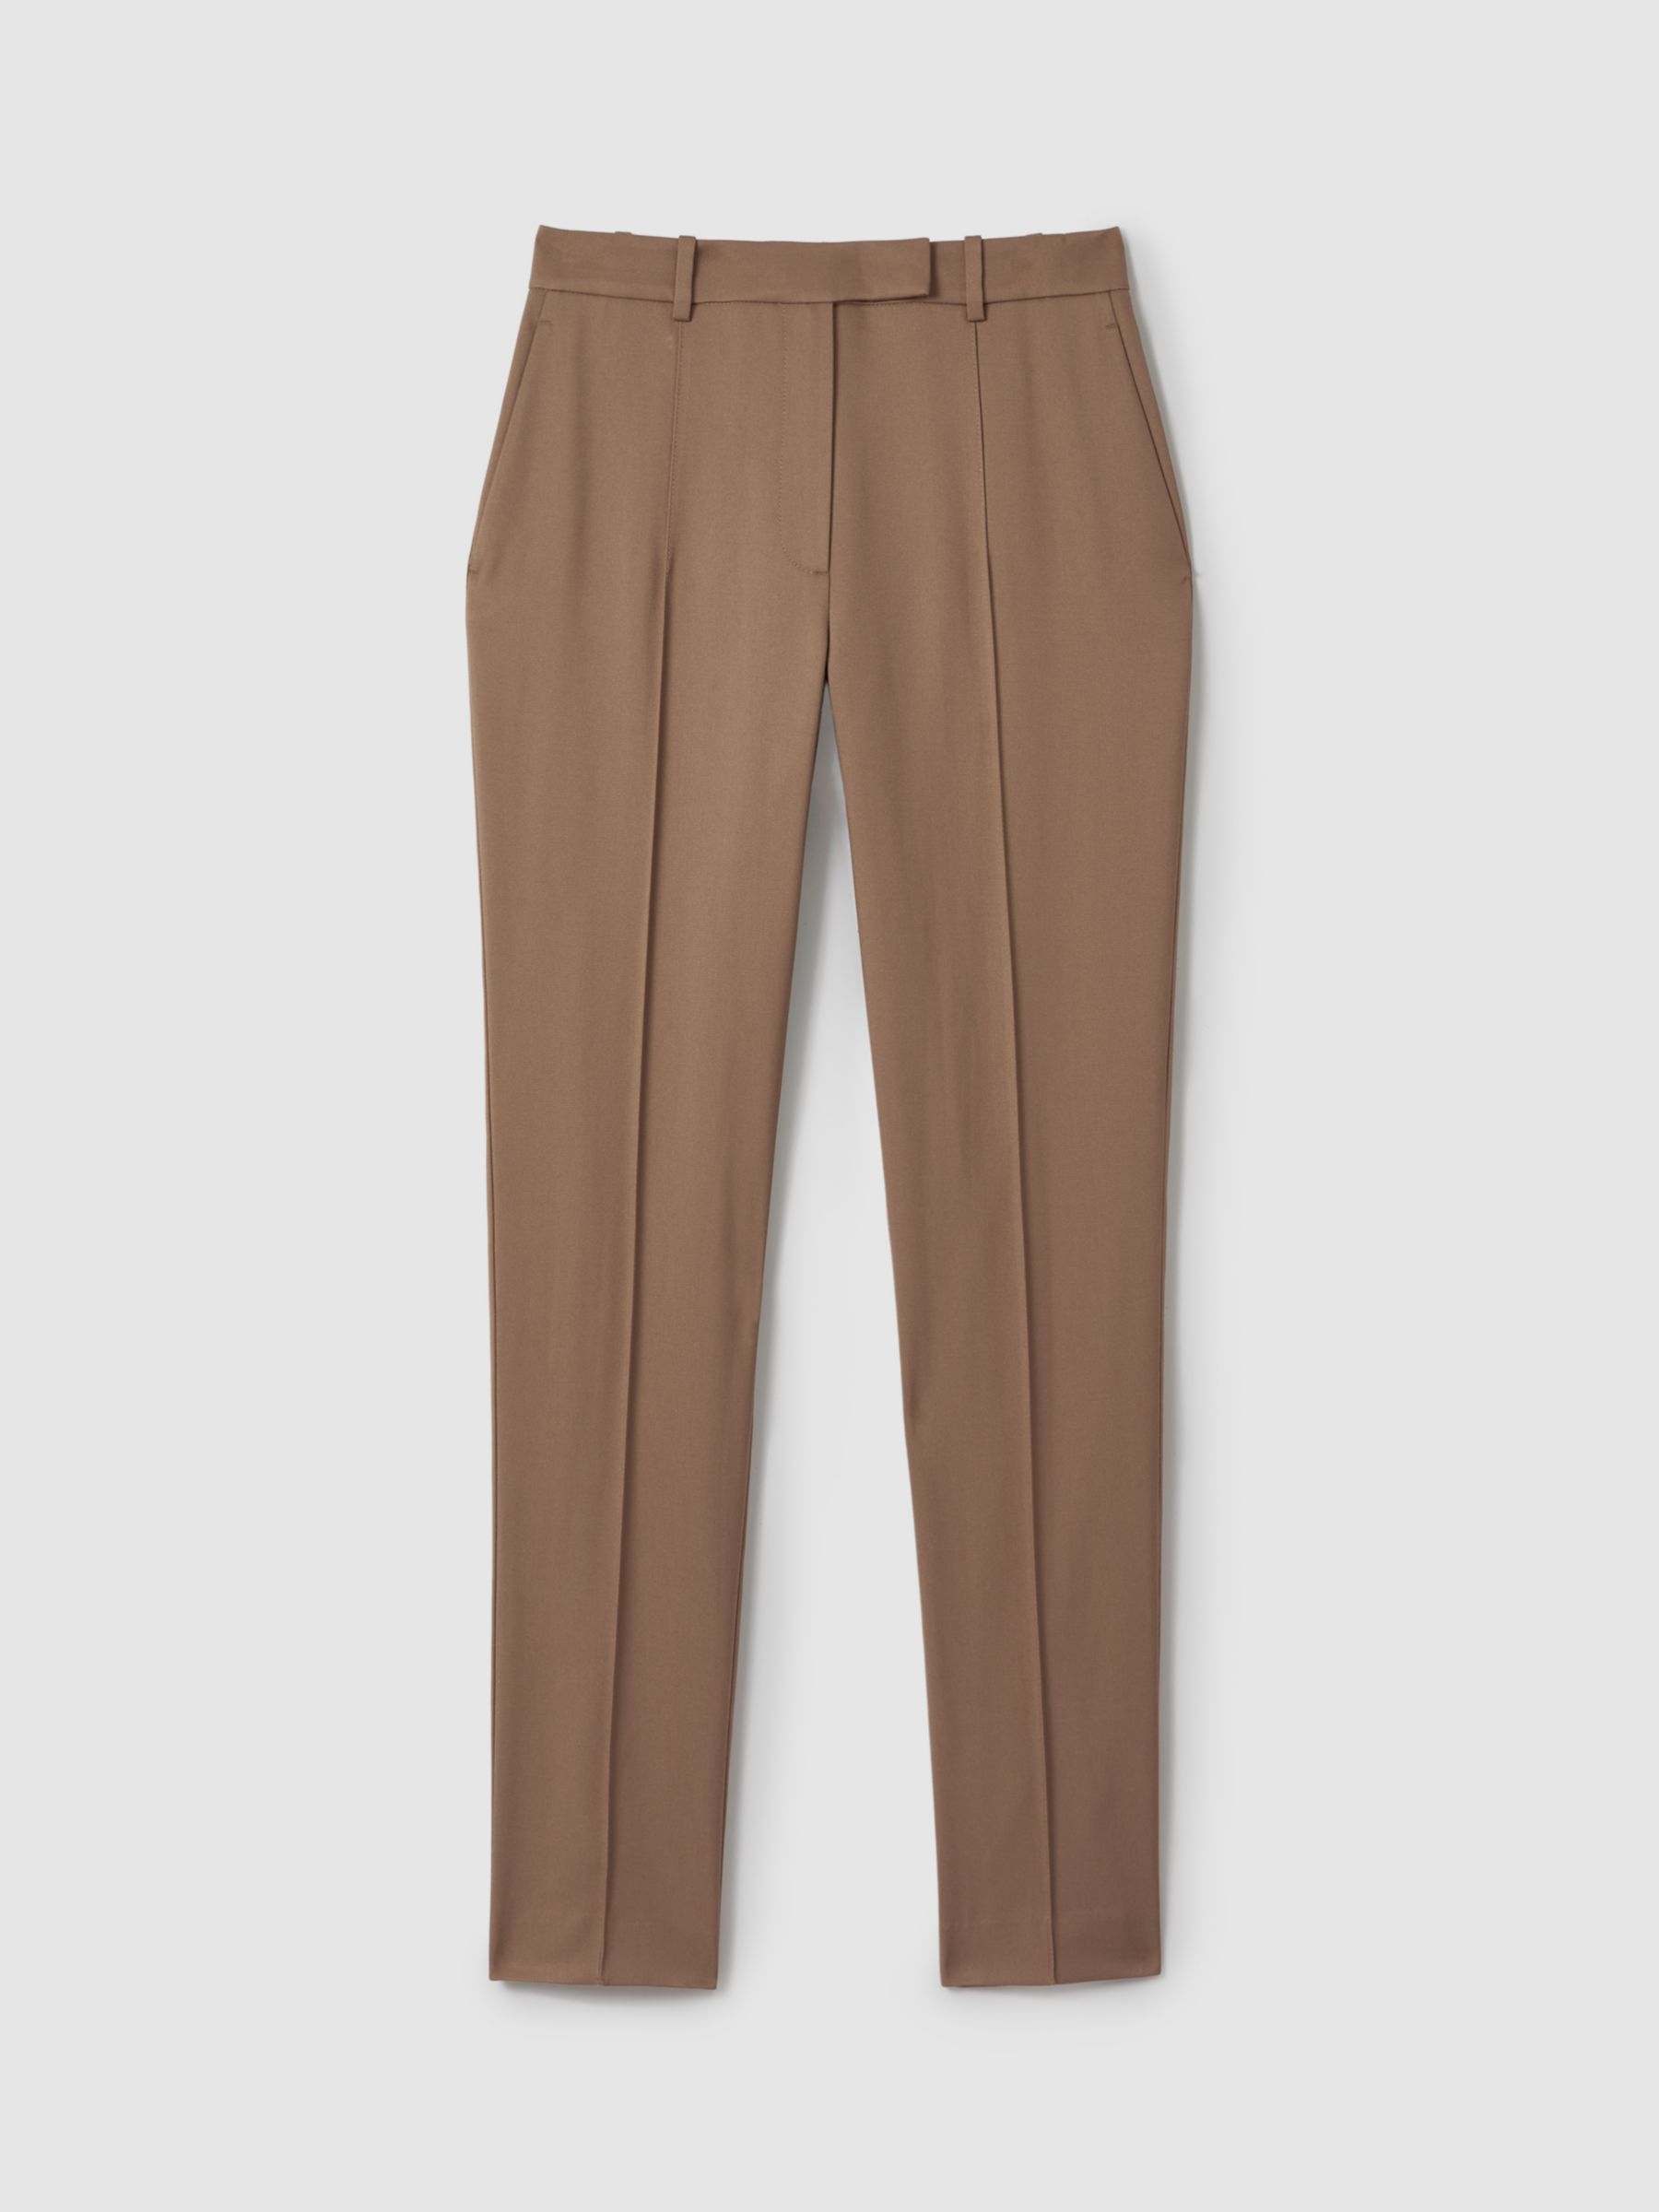 Reiss Wren Slim Fit Suit Trousers, Mink, 6